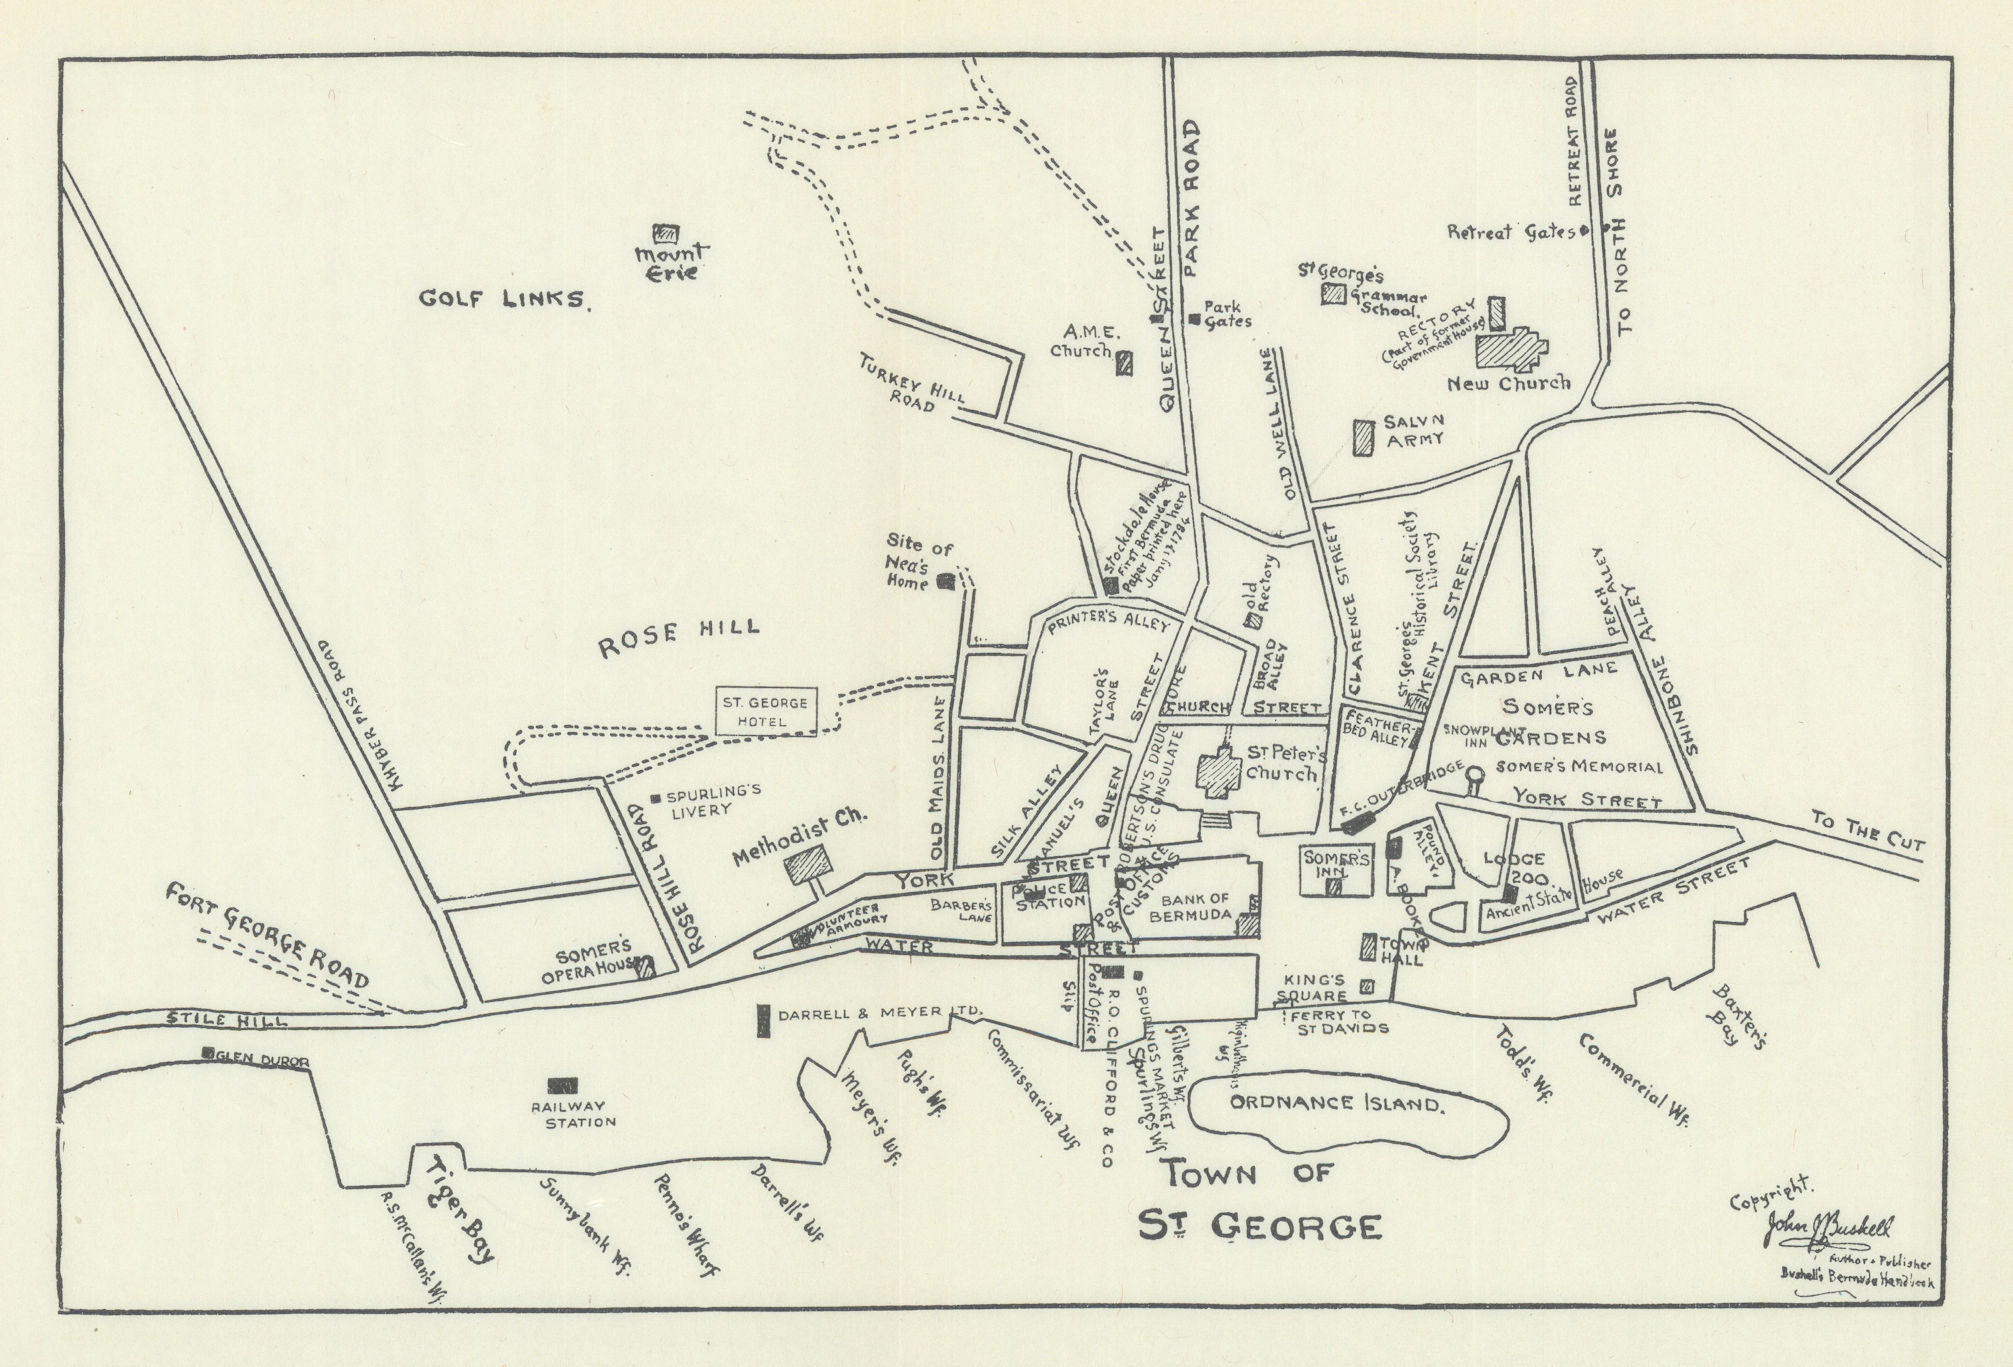 1894 Antique ST PAUL Street Map George Cram Vintage Map of St Paul